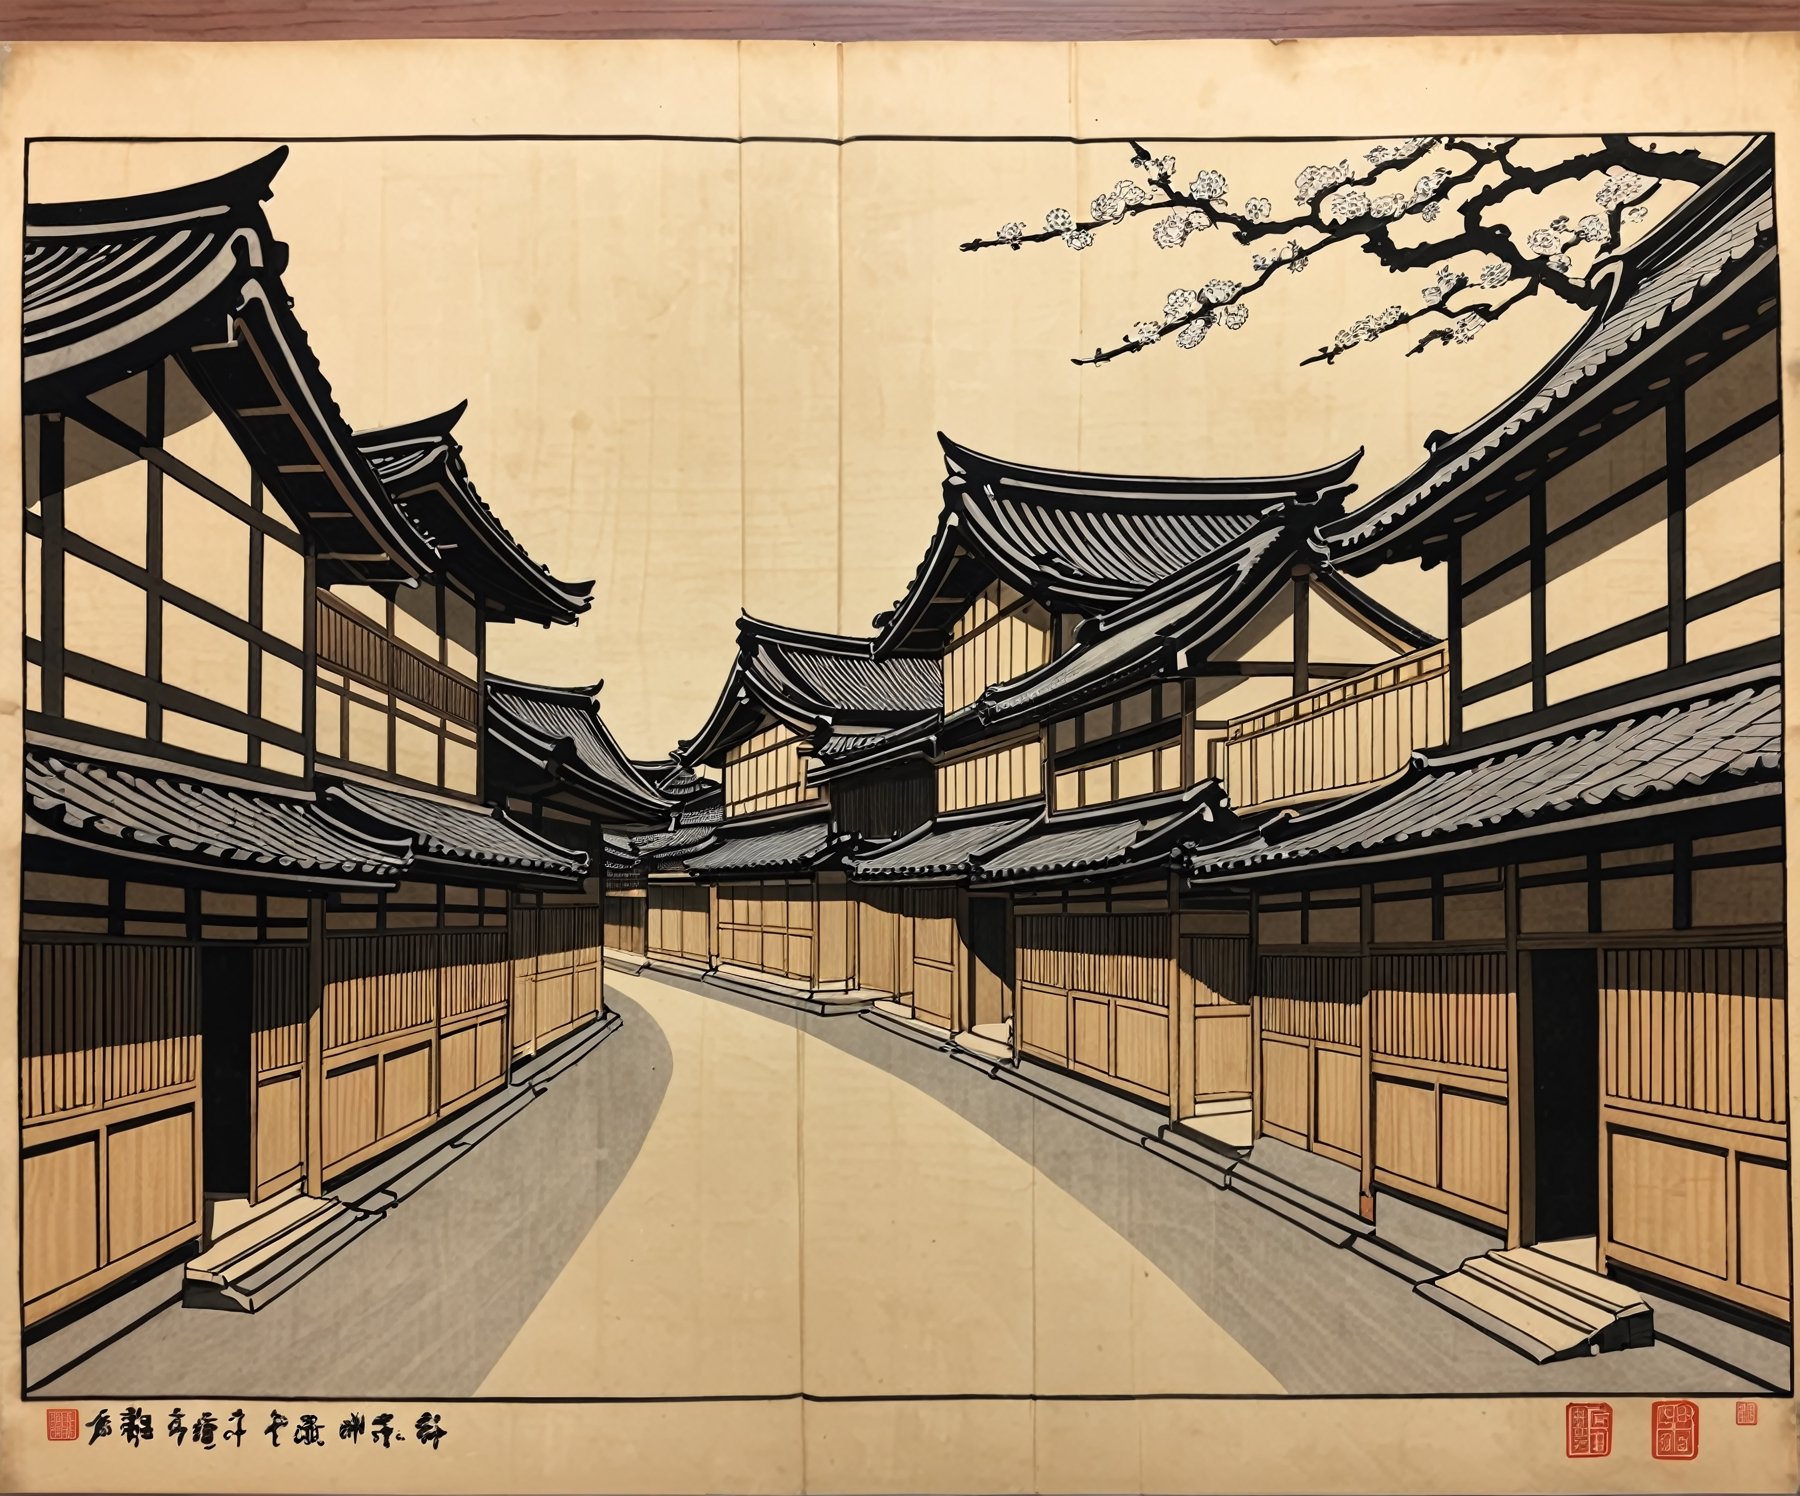 ukyoe woodblock drawing of an bussy japanese feudal edo city marked